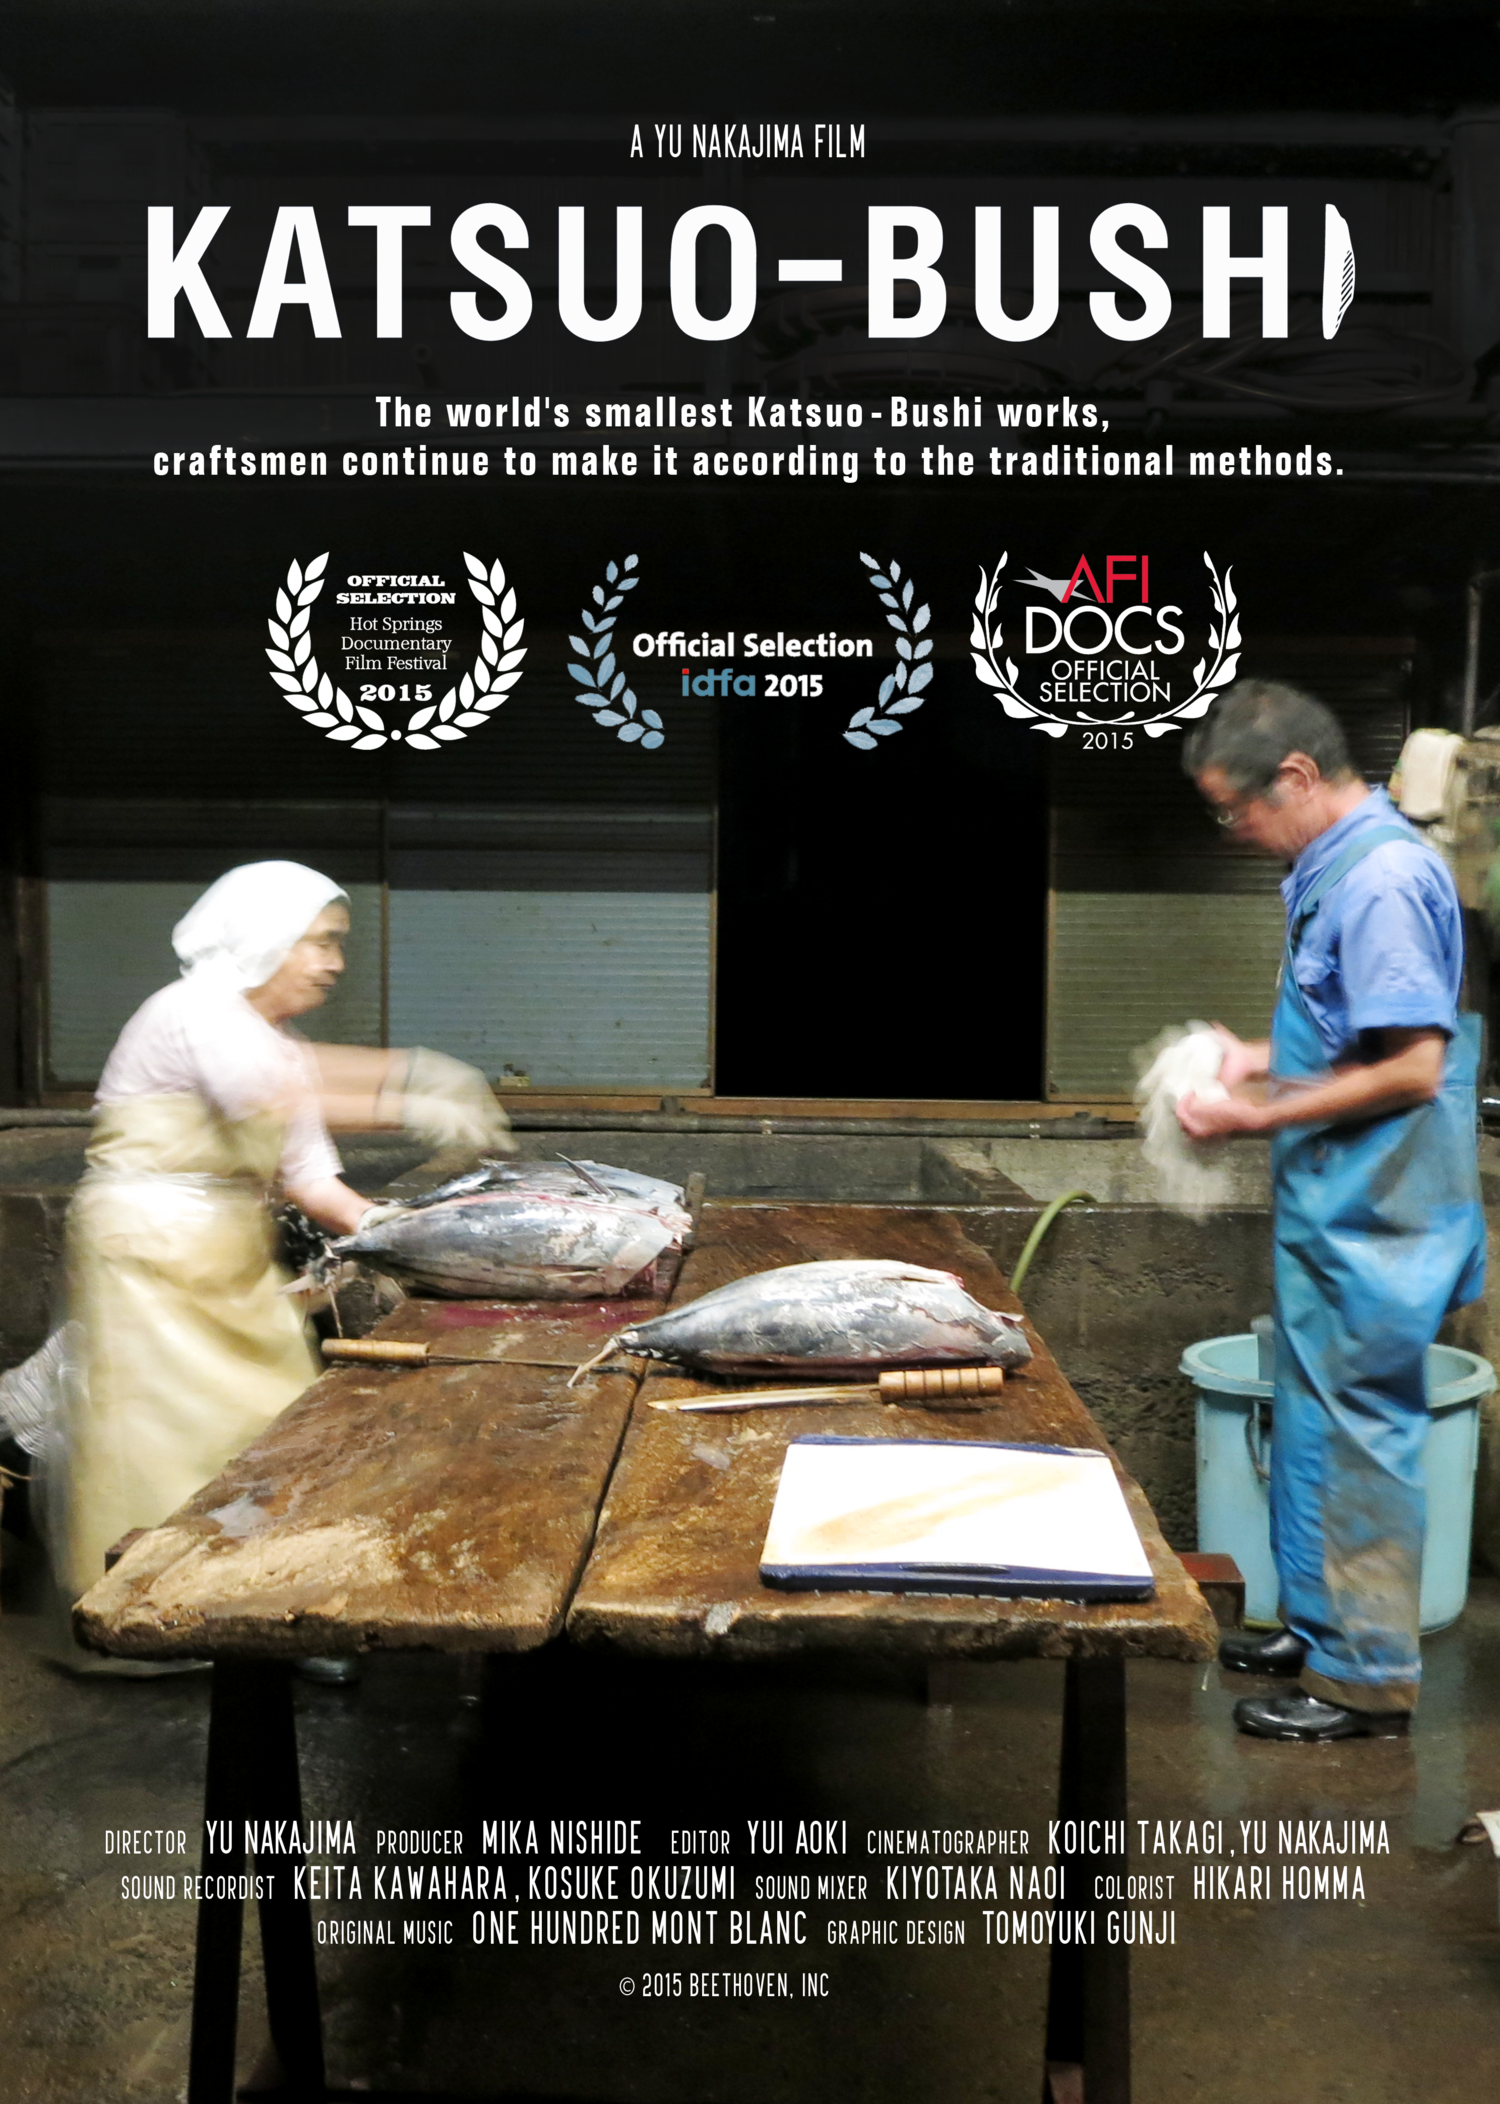 Short Documentary "KATSUO-BUSHI"